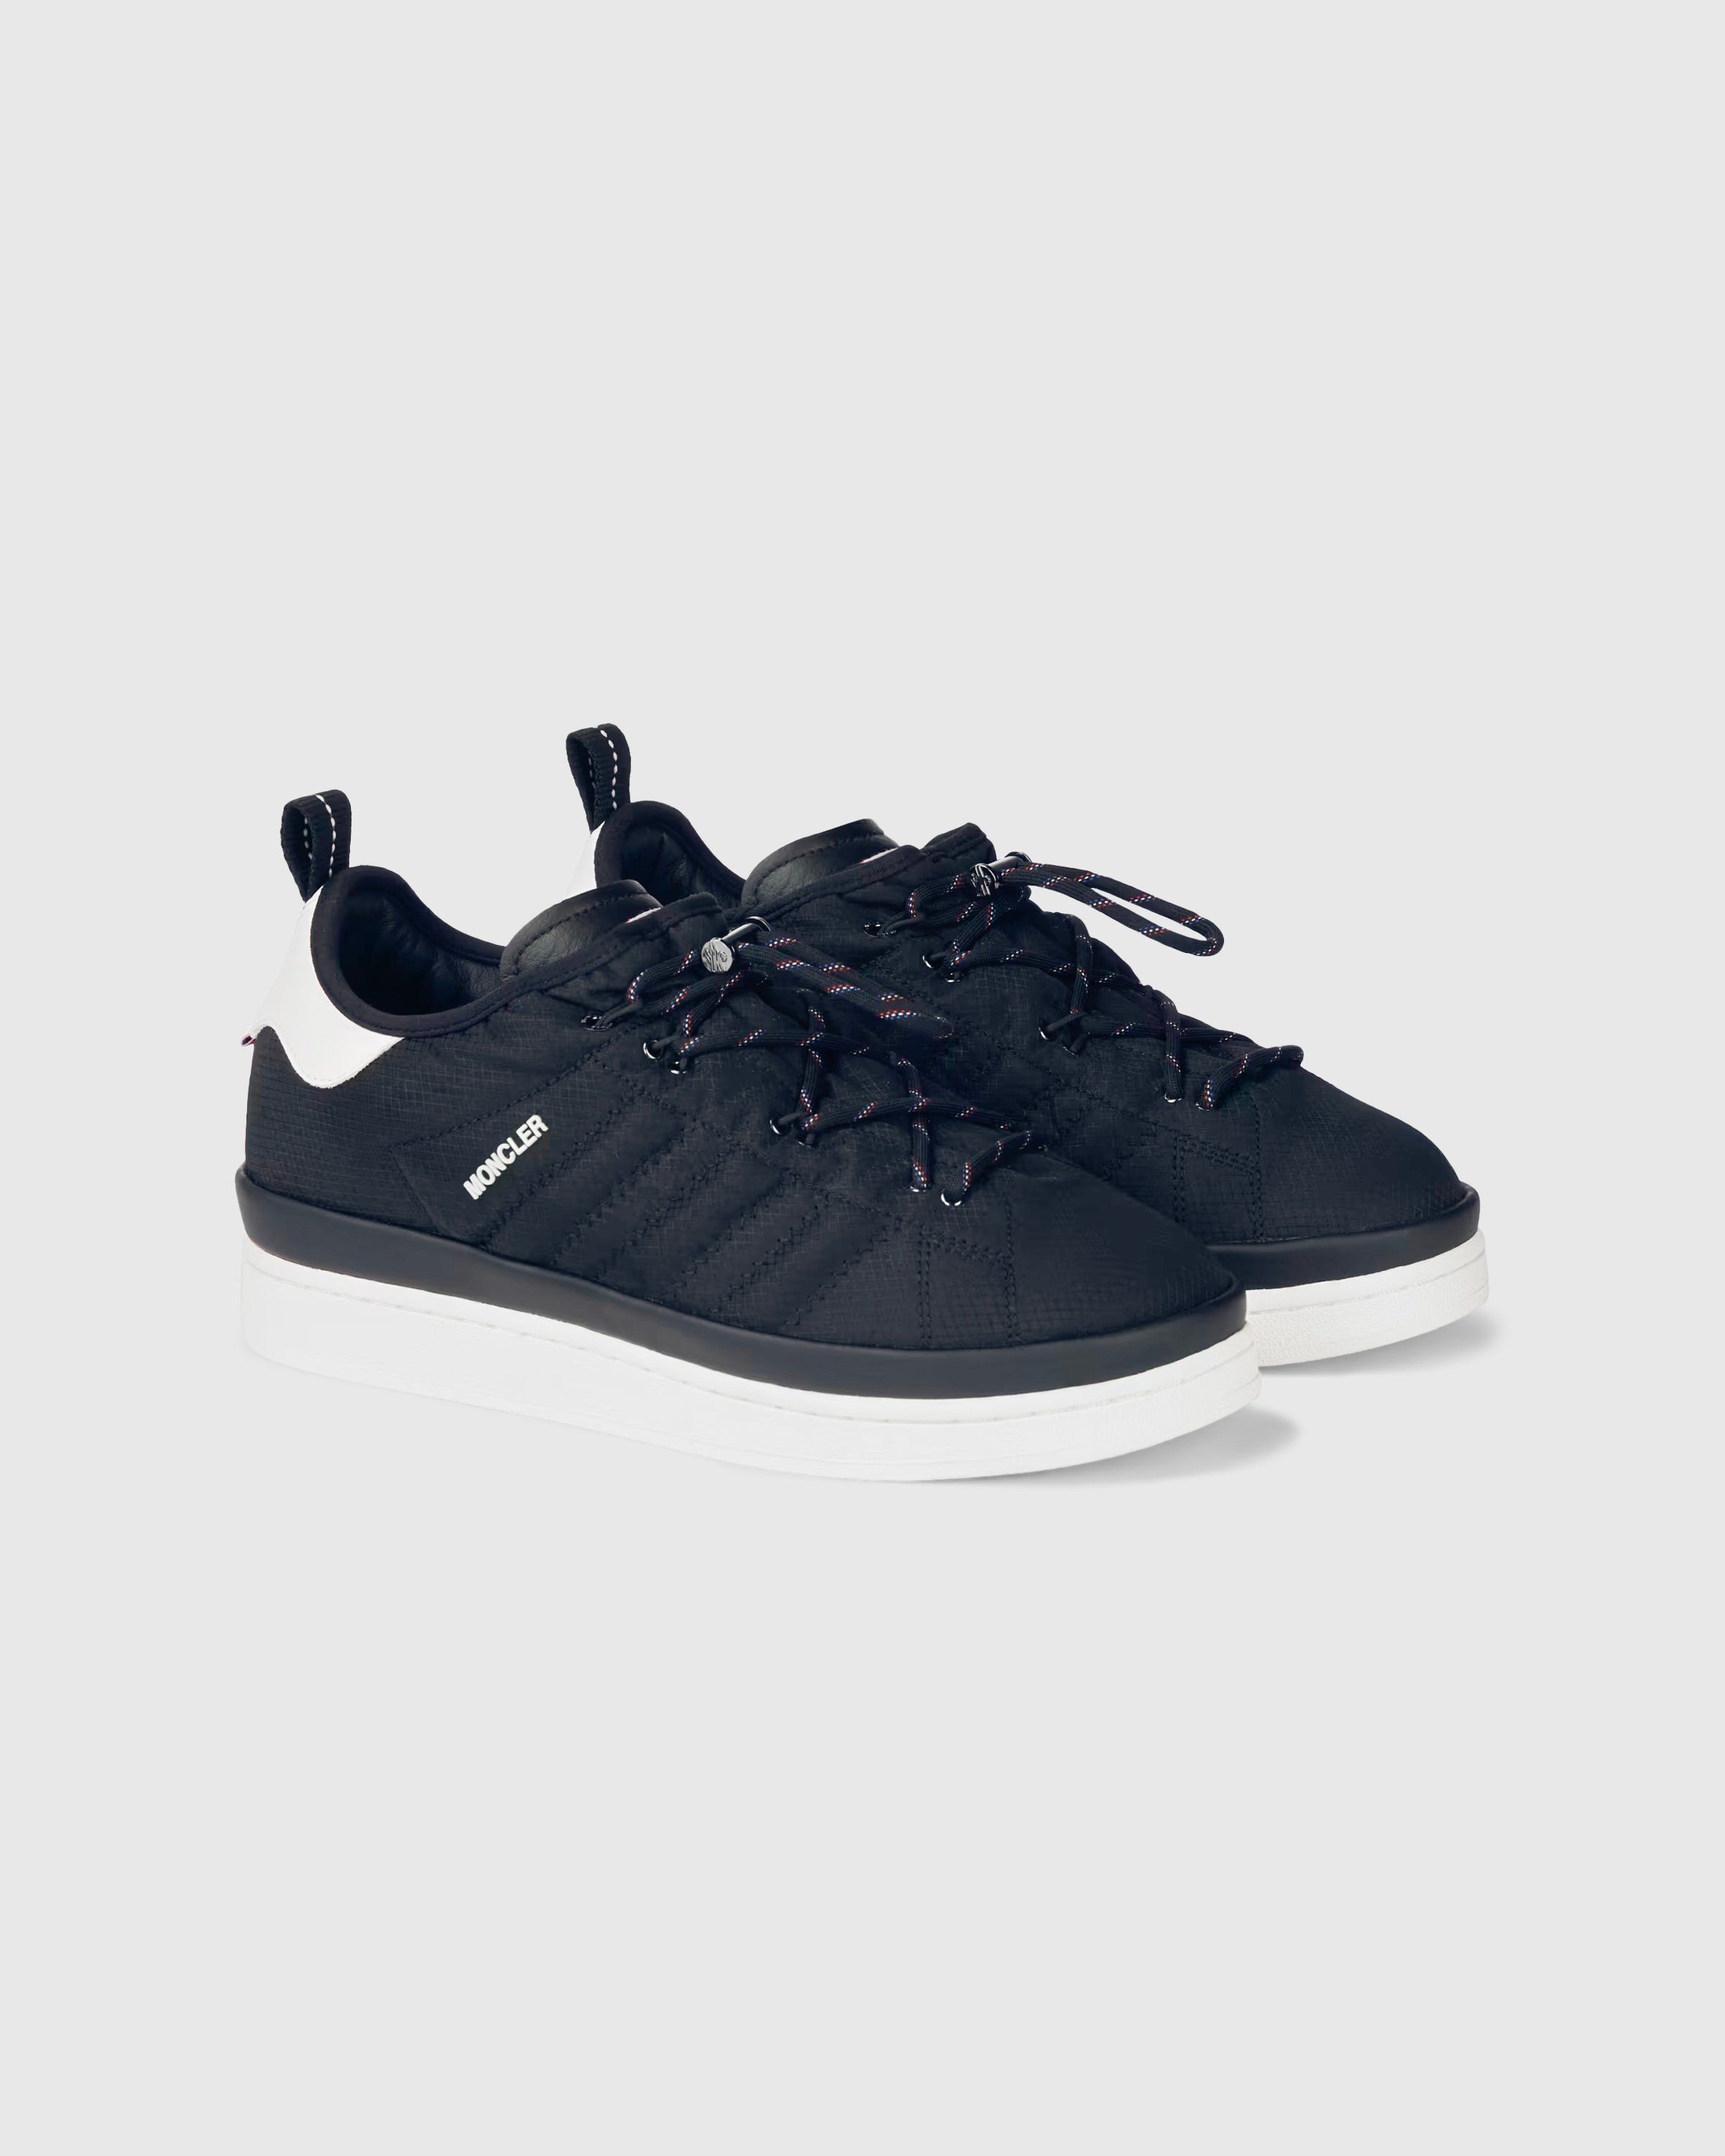 Moncler x adidas Originals - Campus Low Top Sneakers Black - Footwear - Black - Image 2